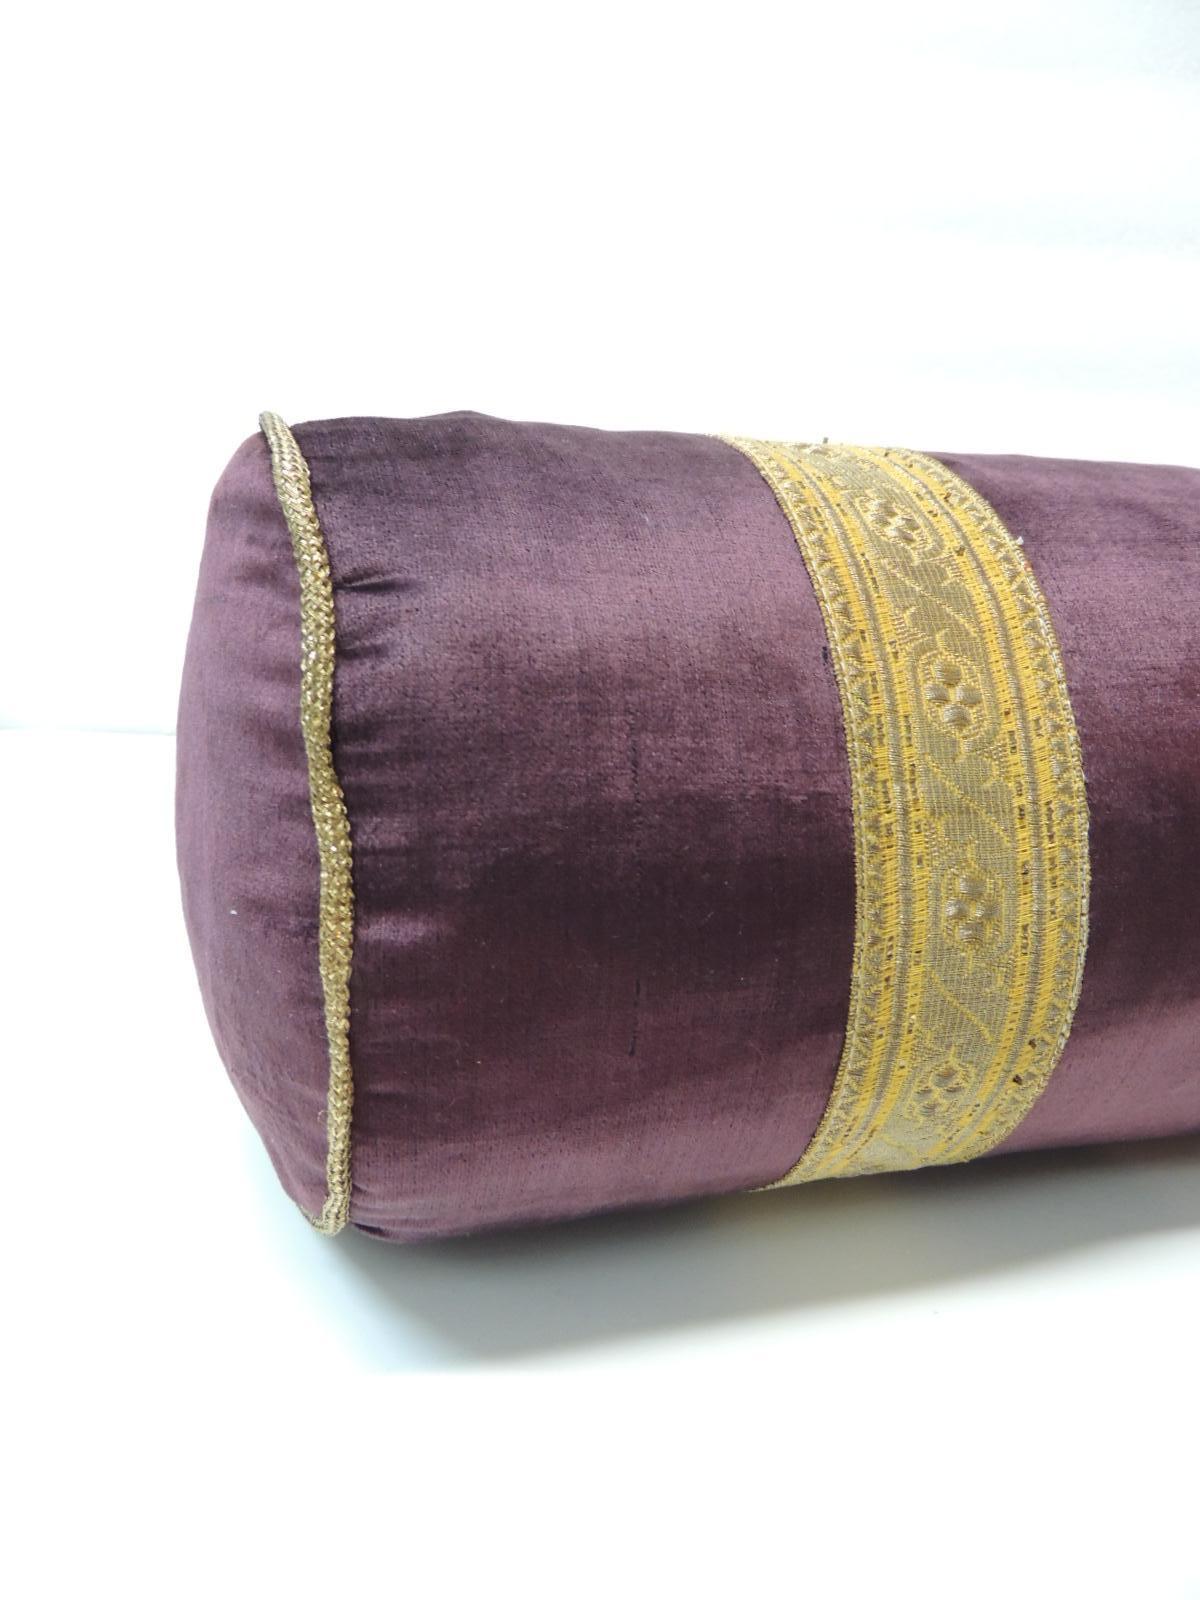 Antique burgundy silk velvet round bolster handmade pillow with gold metallic trims.
Burgundy antique silk bolster decorative pillow designed with two parallel bands of
 antique gold metallic trims and metallic rope details on both edges
handmade in